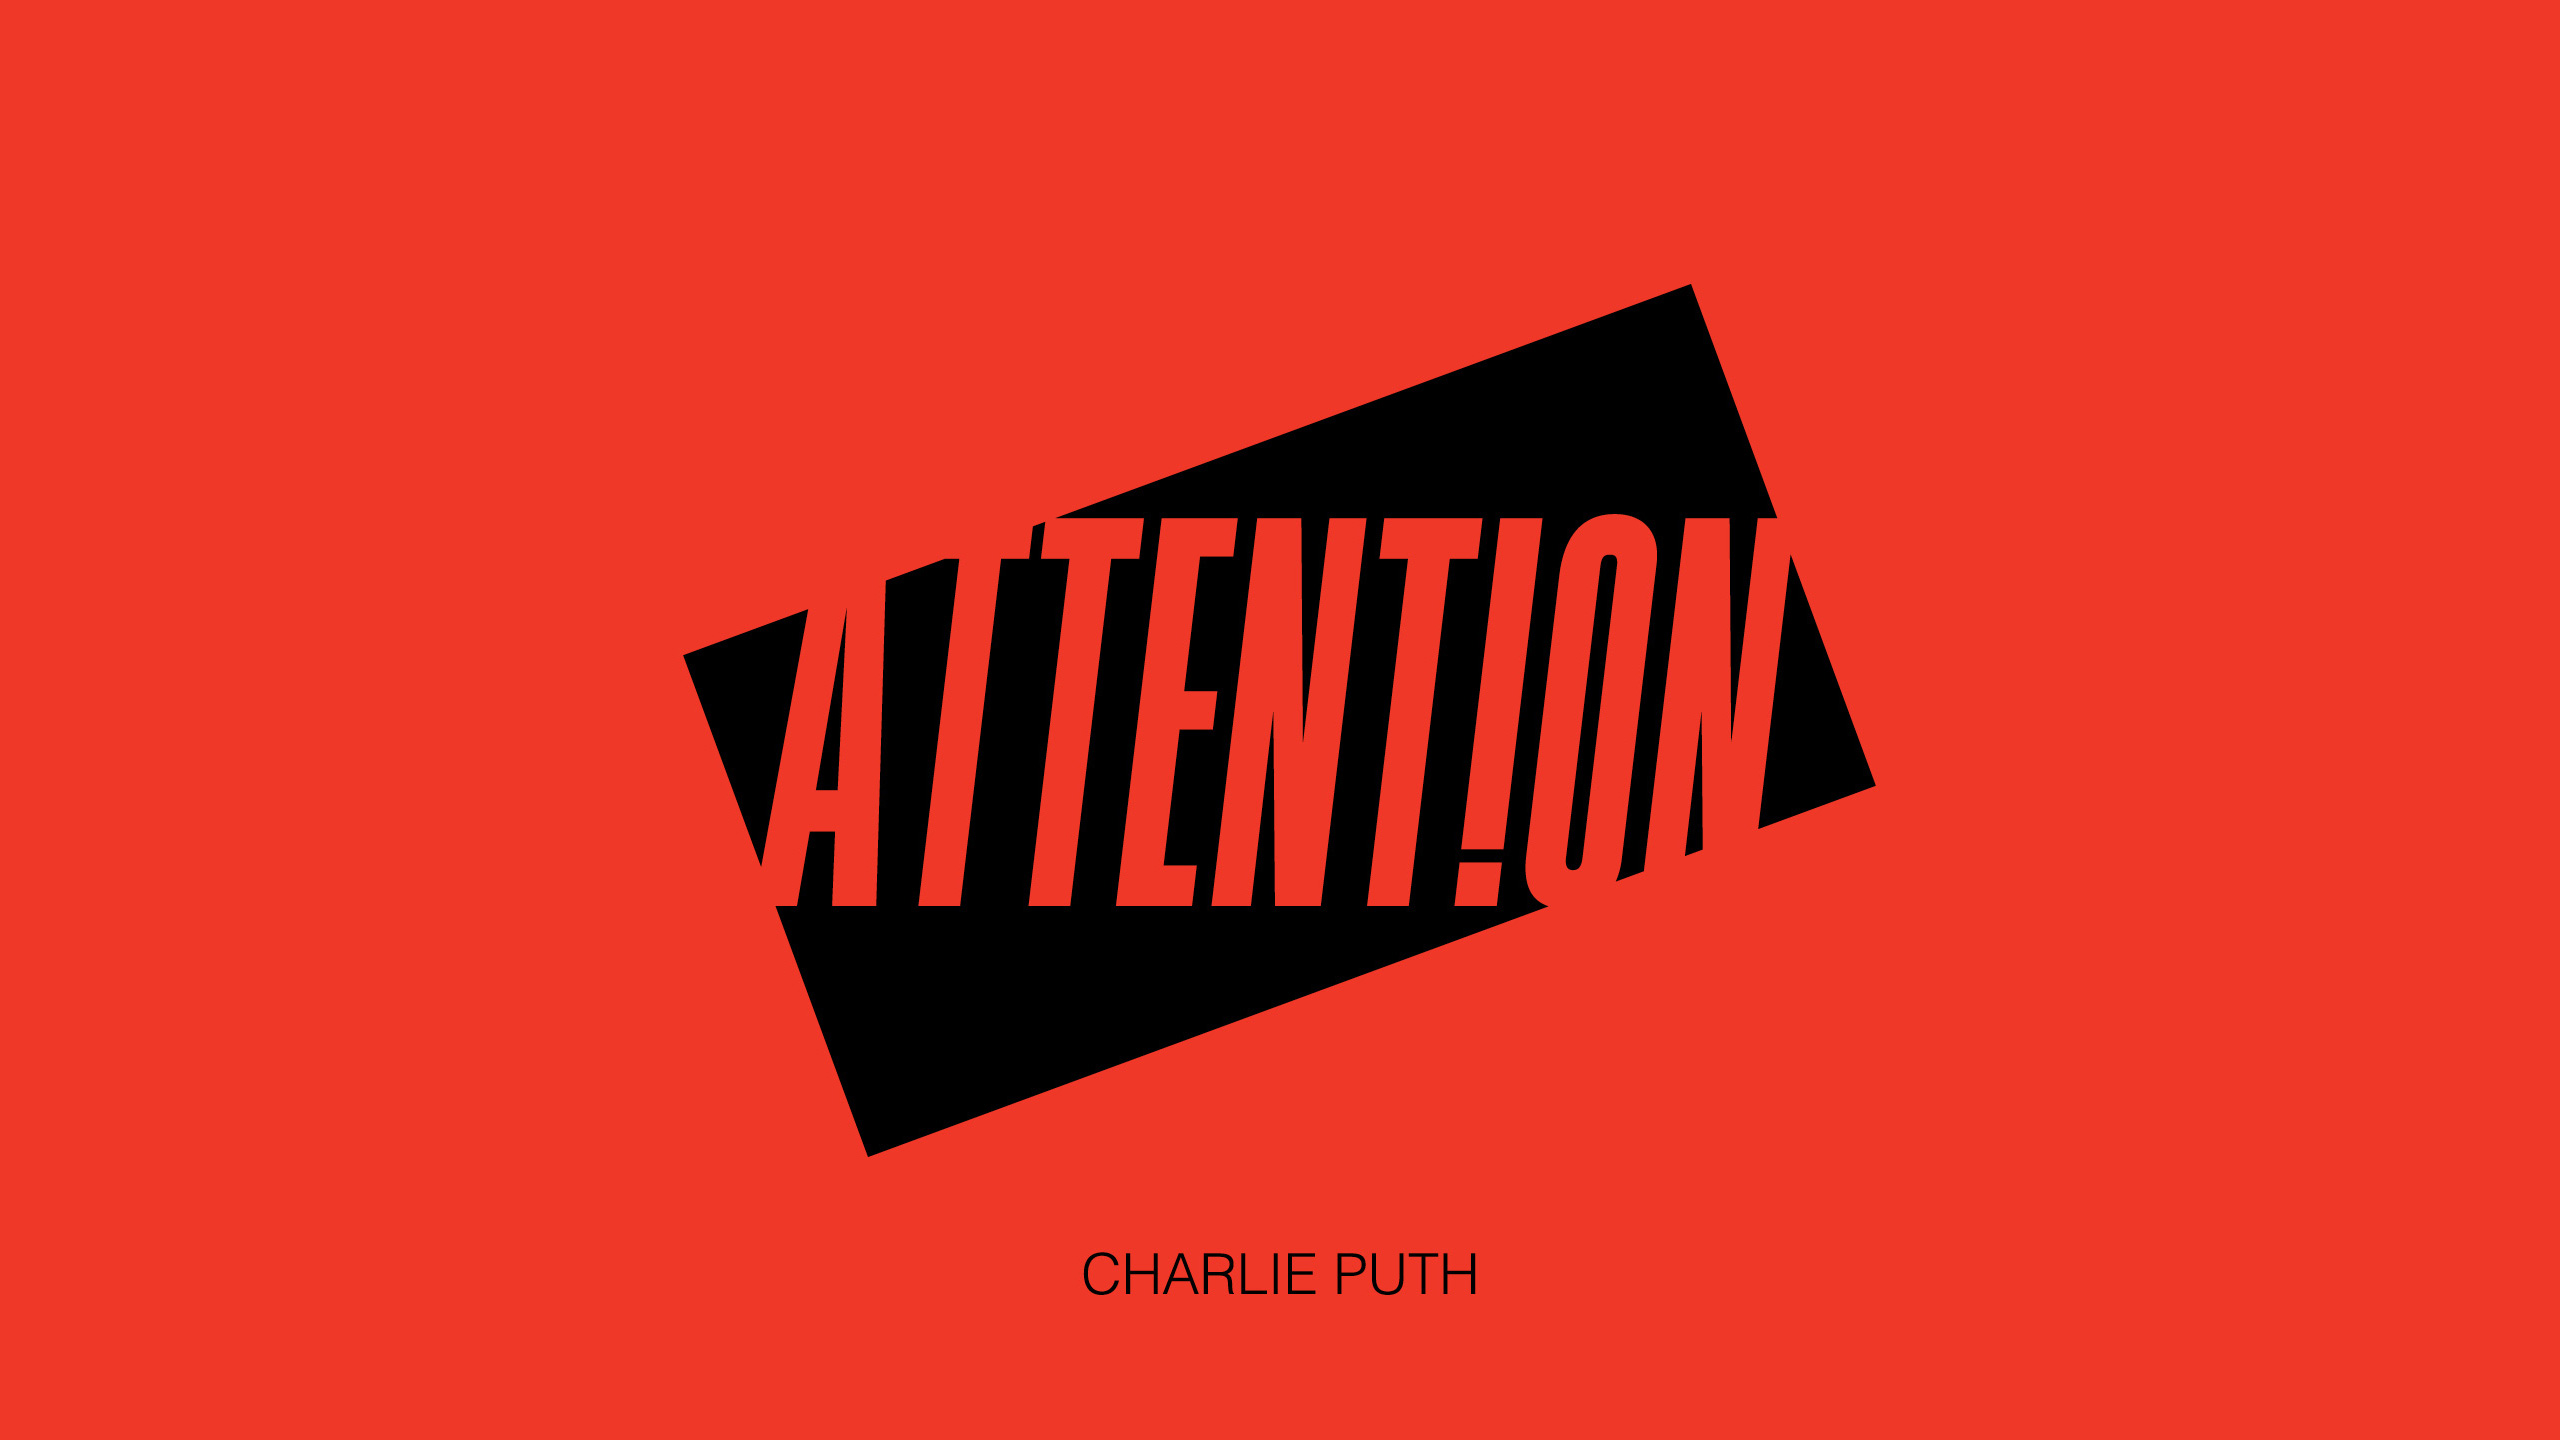 Attention Wallpaper Charlie Puth - HD Wallpaper 